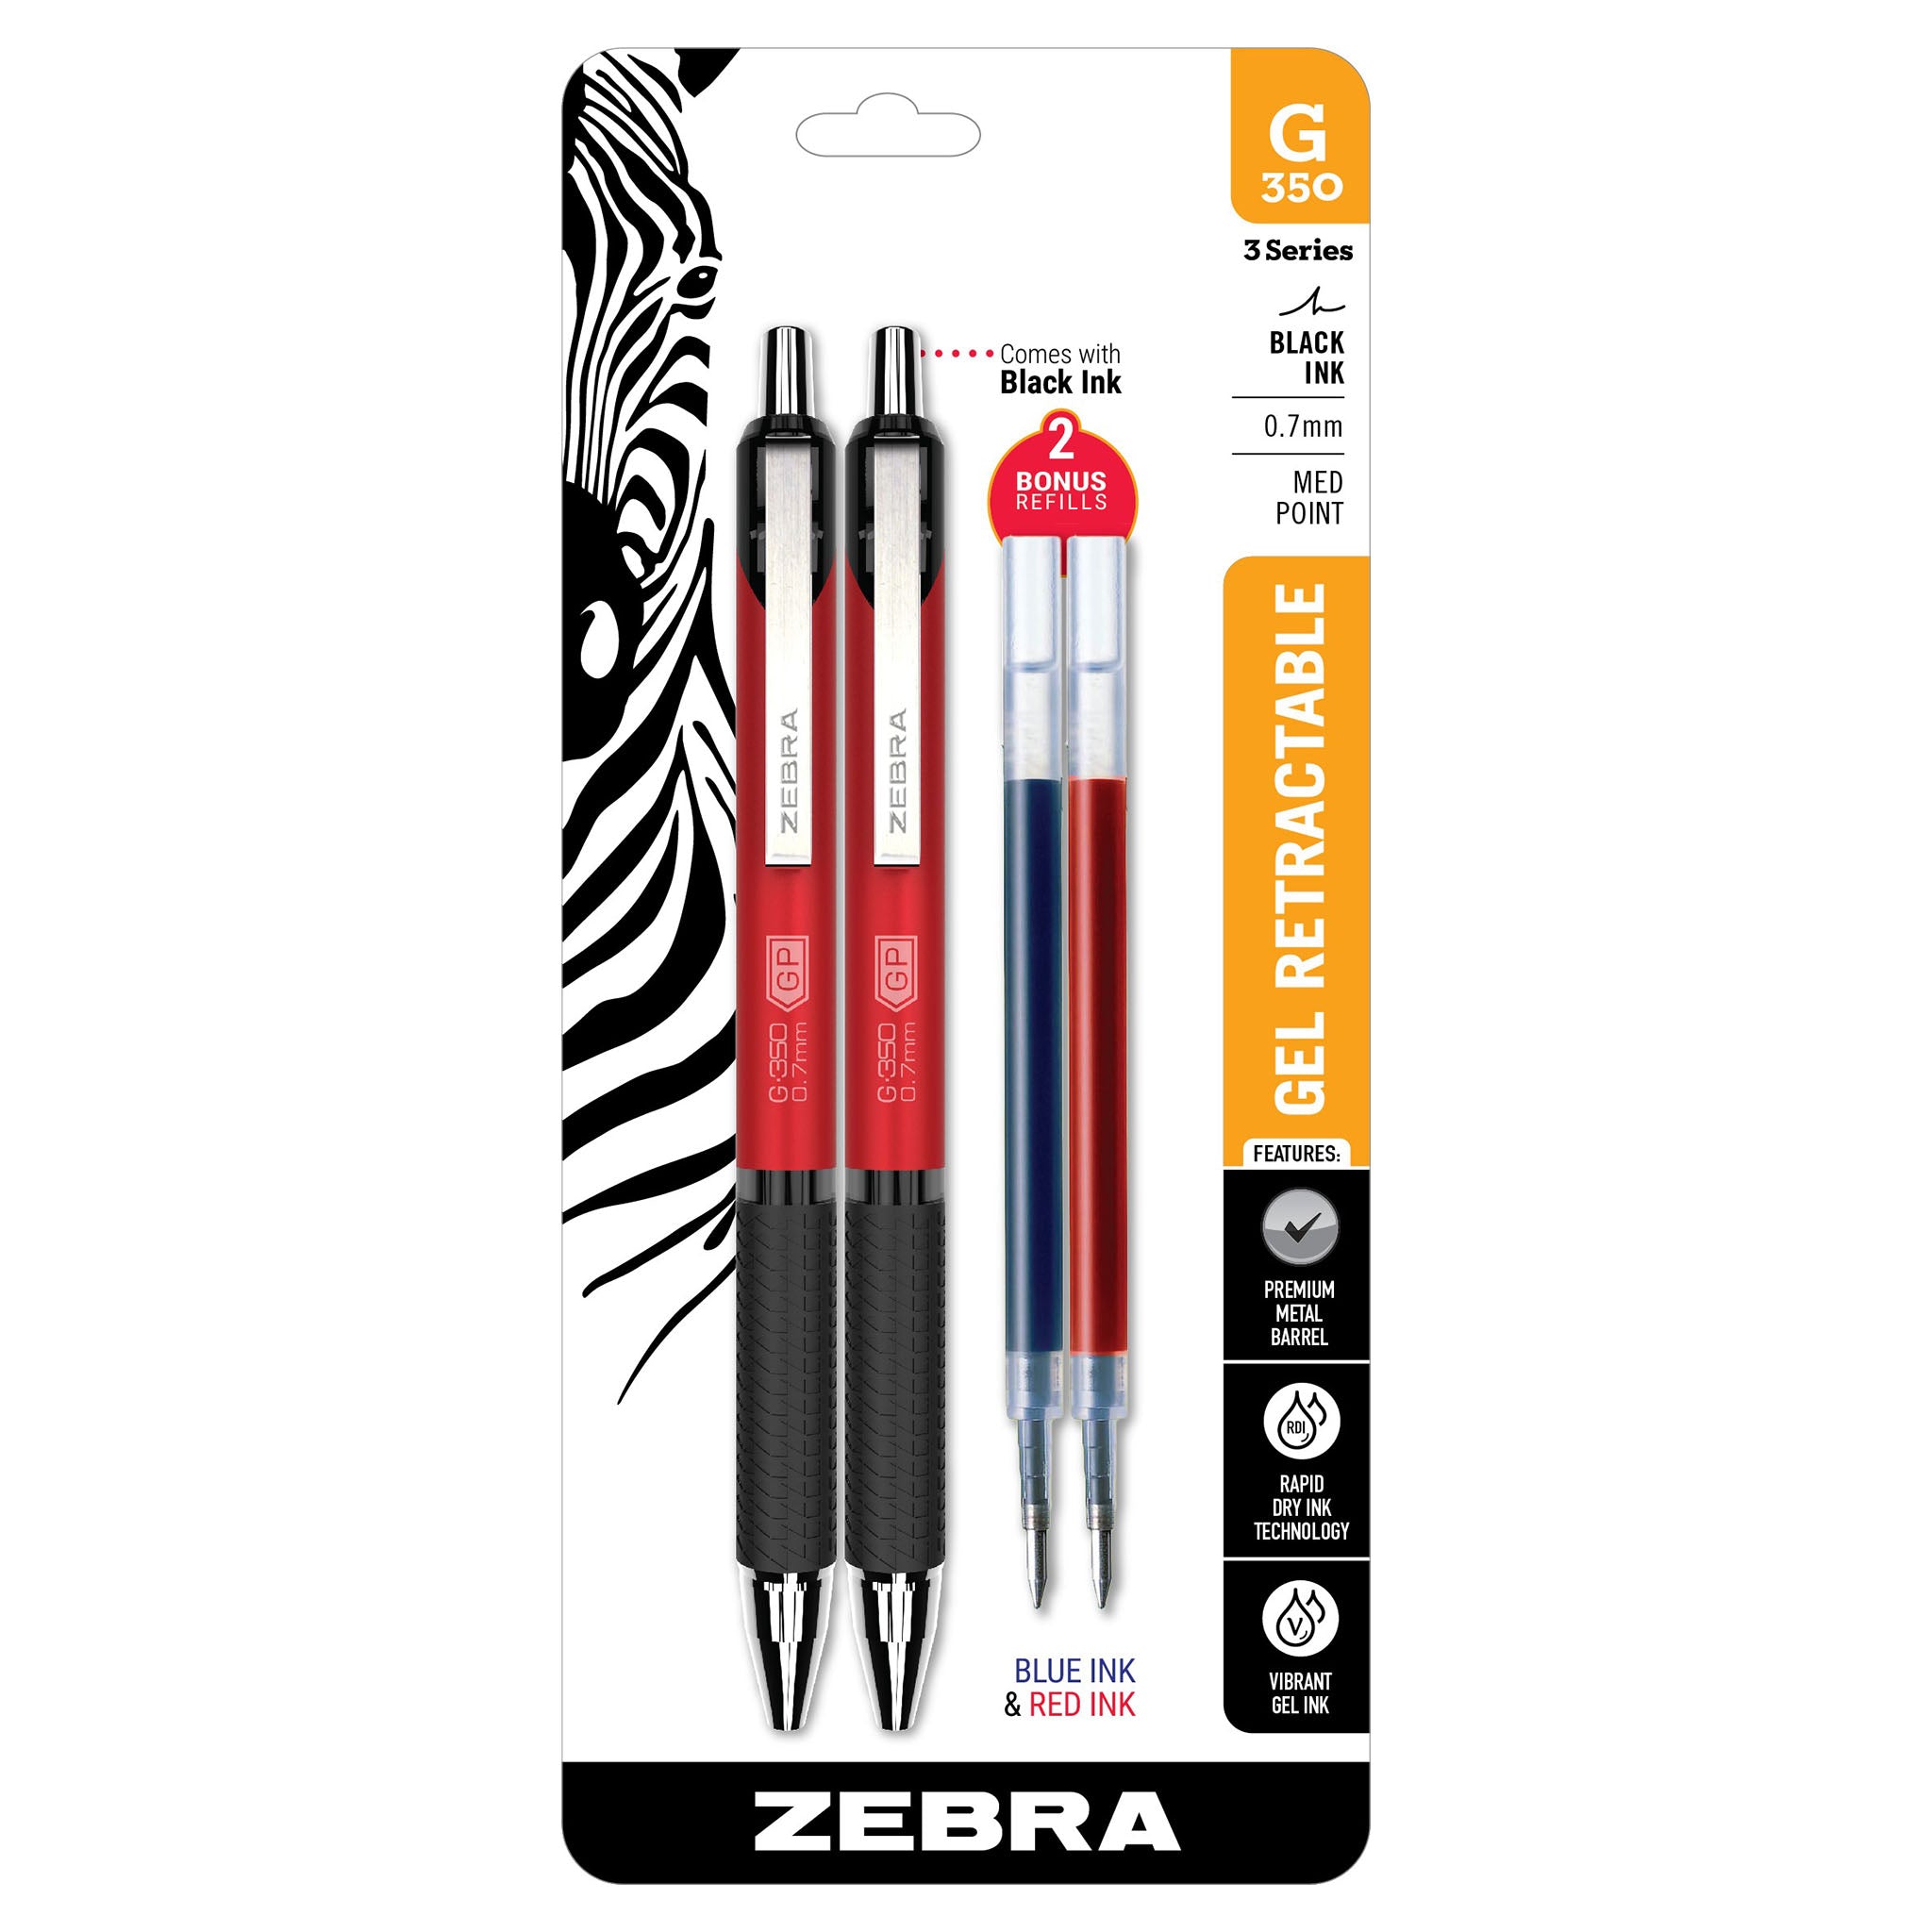 Zebra Pen G-350 Retractable Gel Pen with 2 Bonus Refills, Medium Point, 0.7mm, Crimson Red Barrel, Black Rapid Dry Ink, 2 Pack, Model:40312